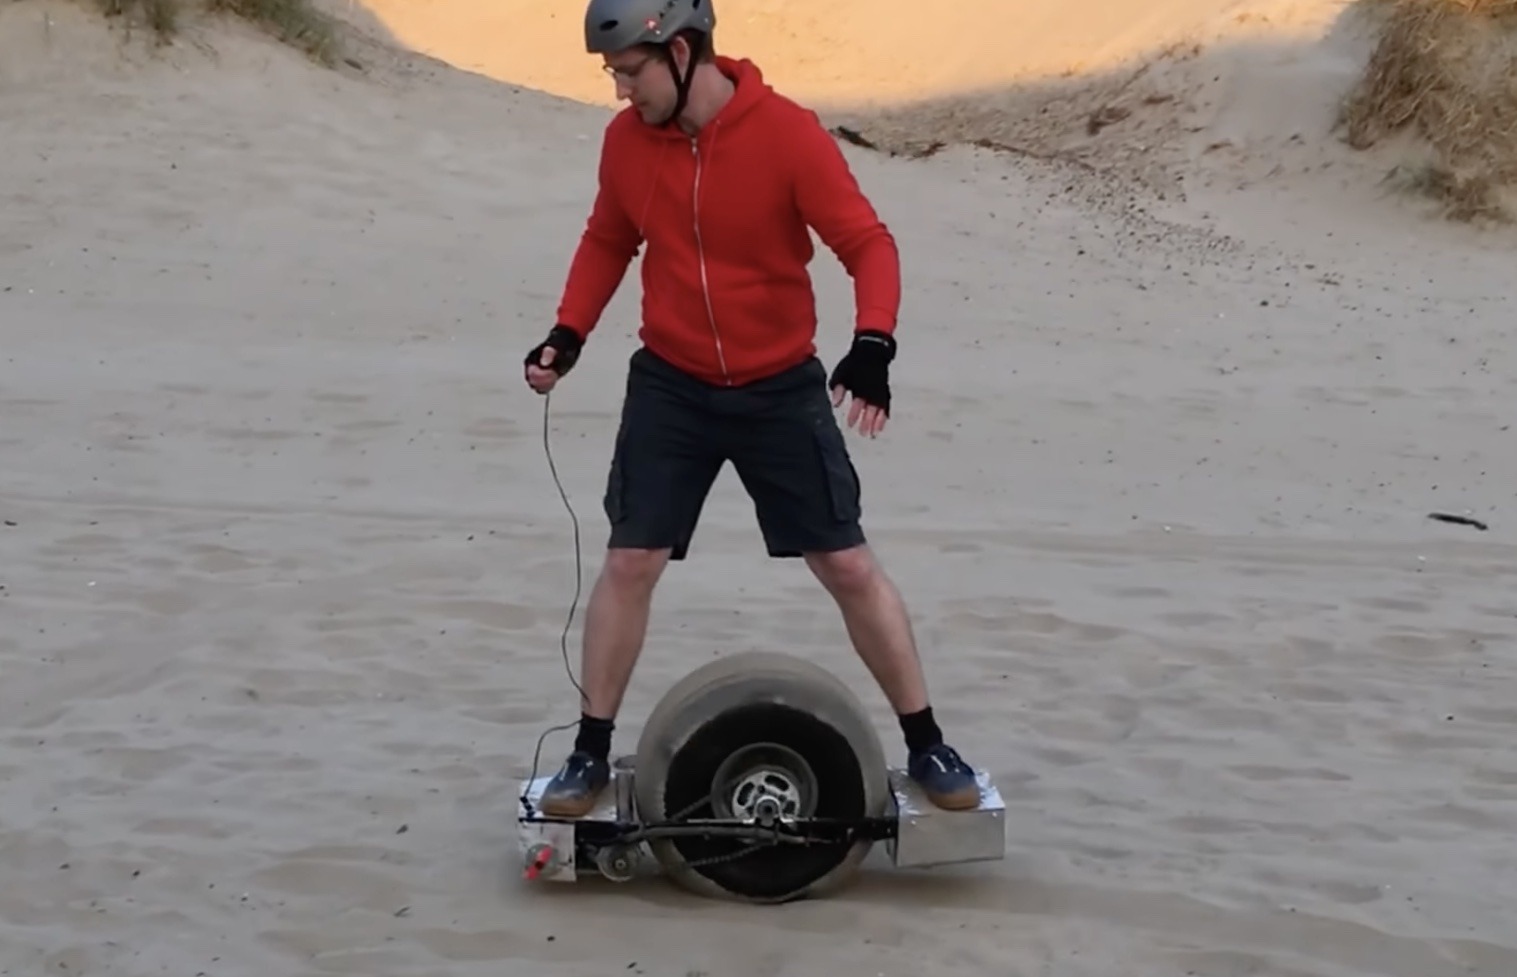 Mega-Wheelie puts Onewheel skateboards to shame